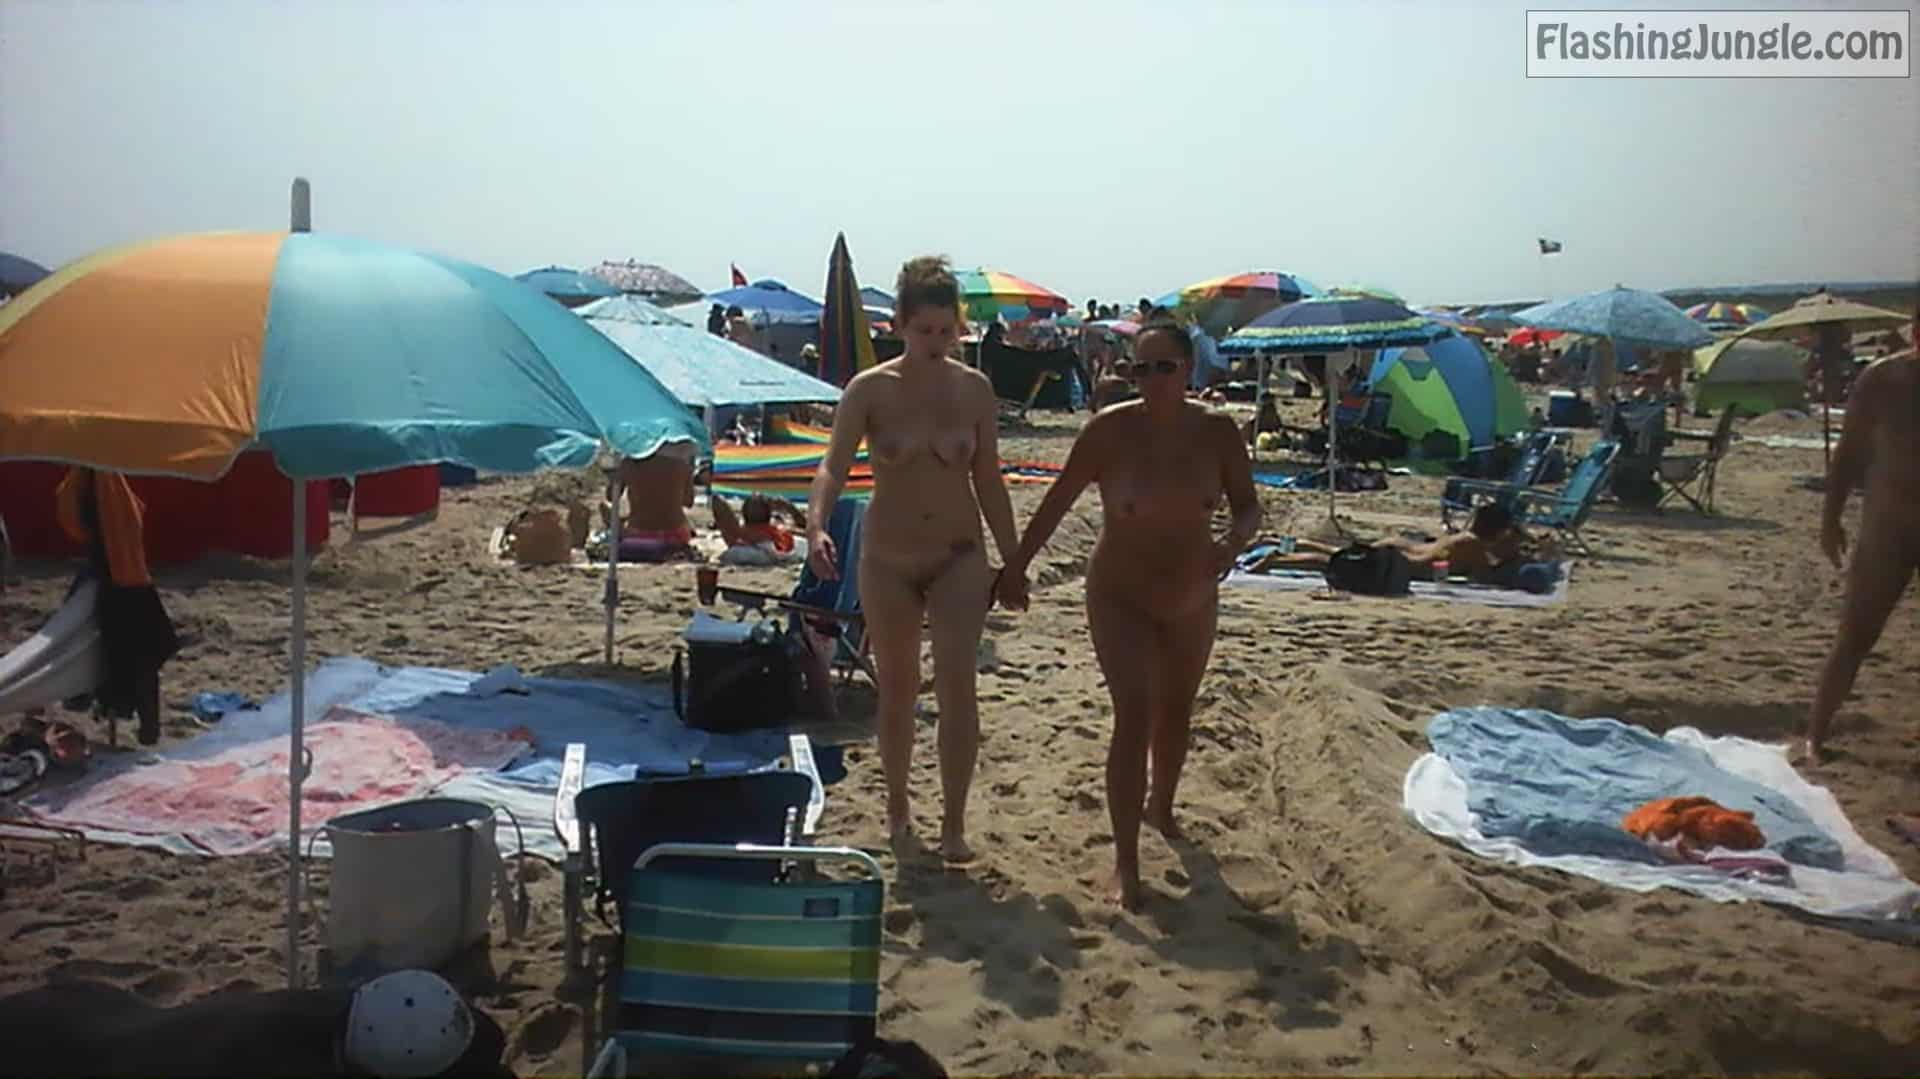 Voyeur Pics Real Amateurs Public Nudity Pics Nude Beach Pics - Sexy beach bitches (1)